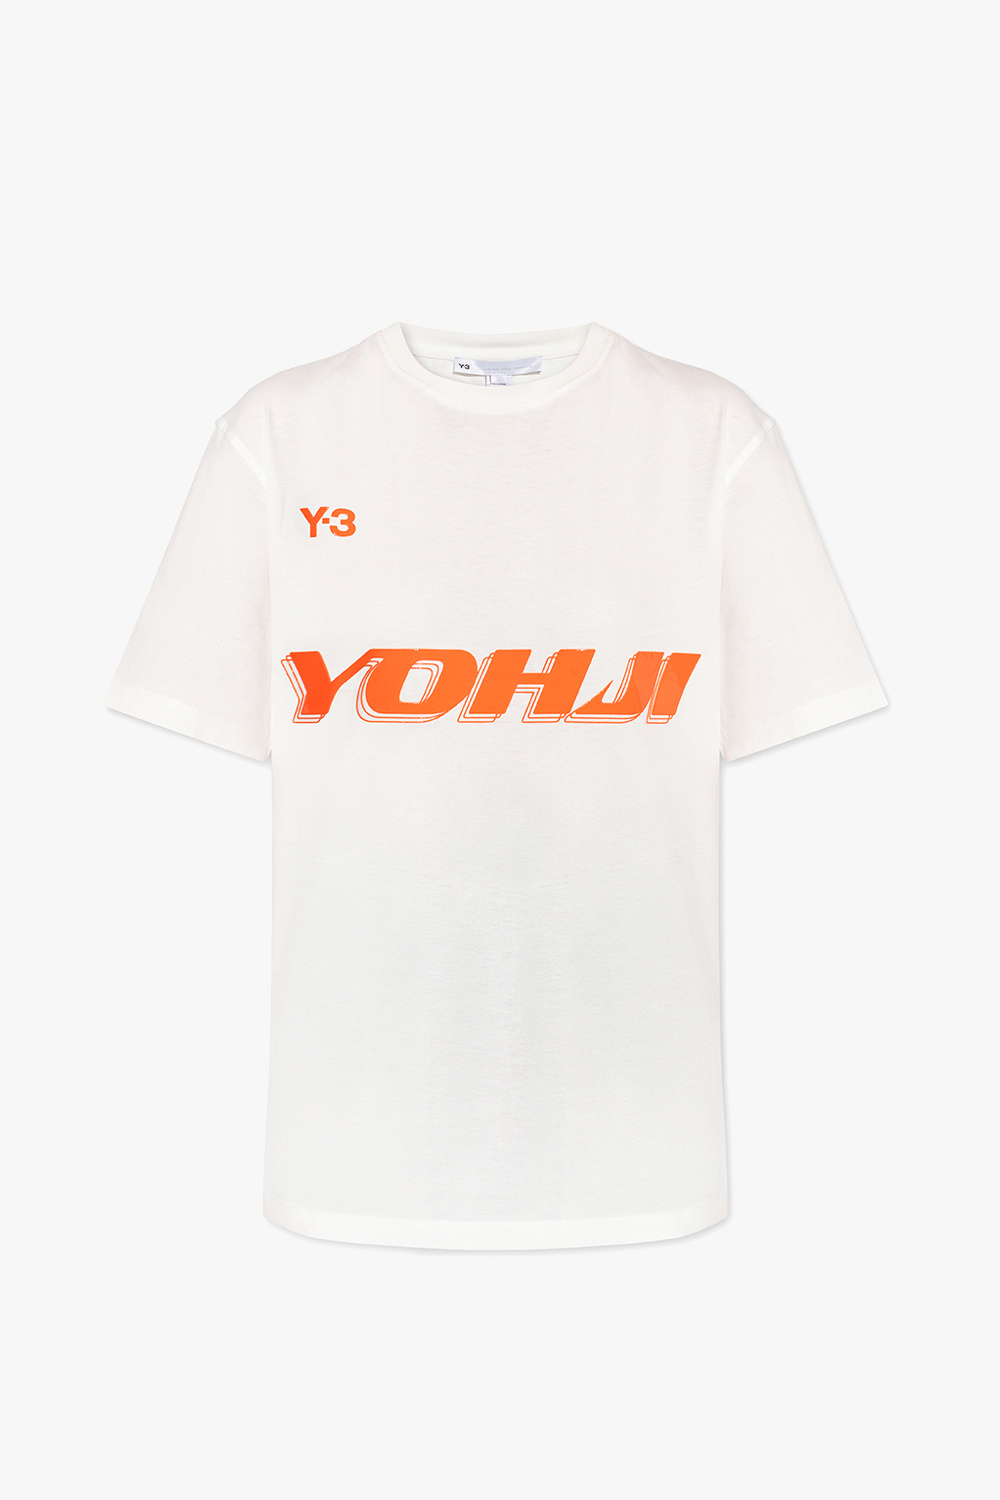 Logo T - IetpShops Germany - for shirt Y - 3 Yohji Yamamoto - The